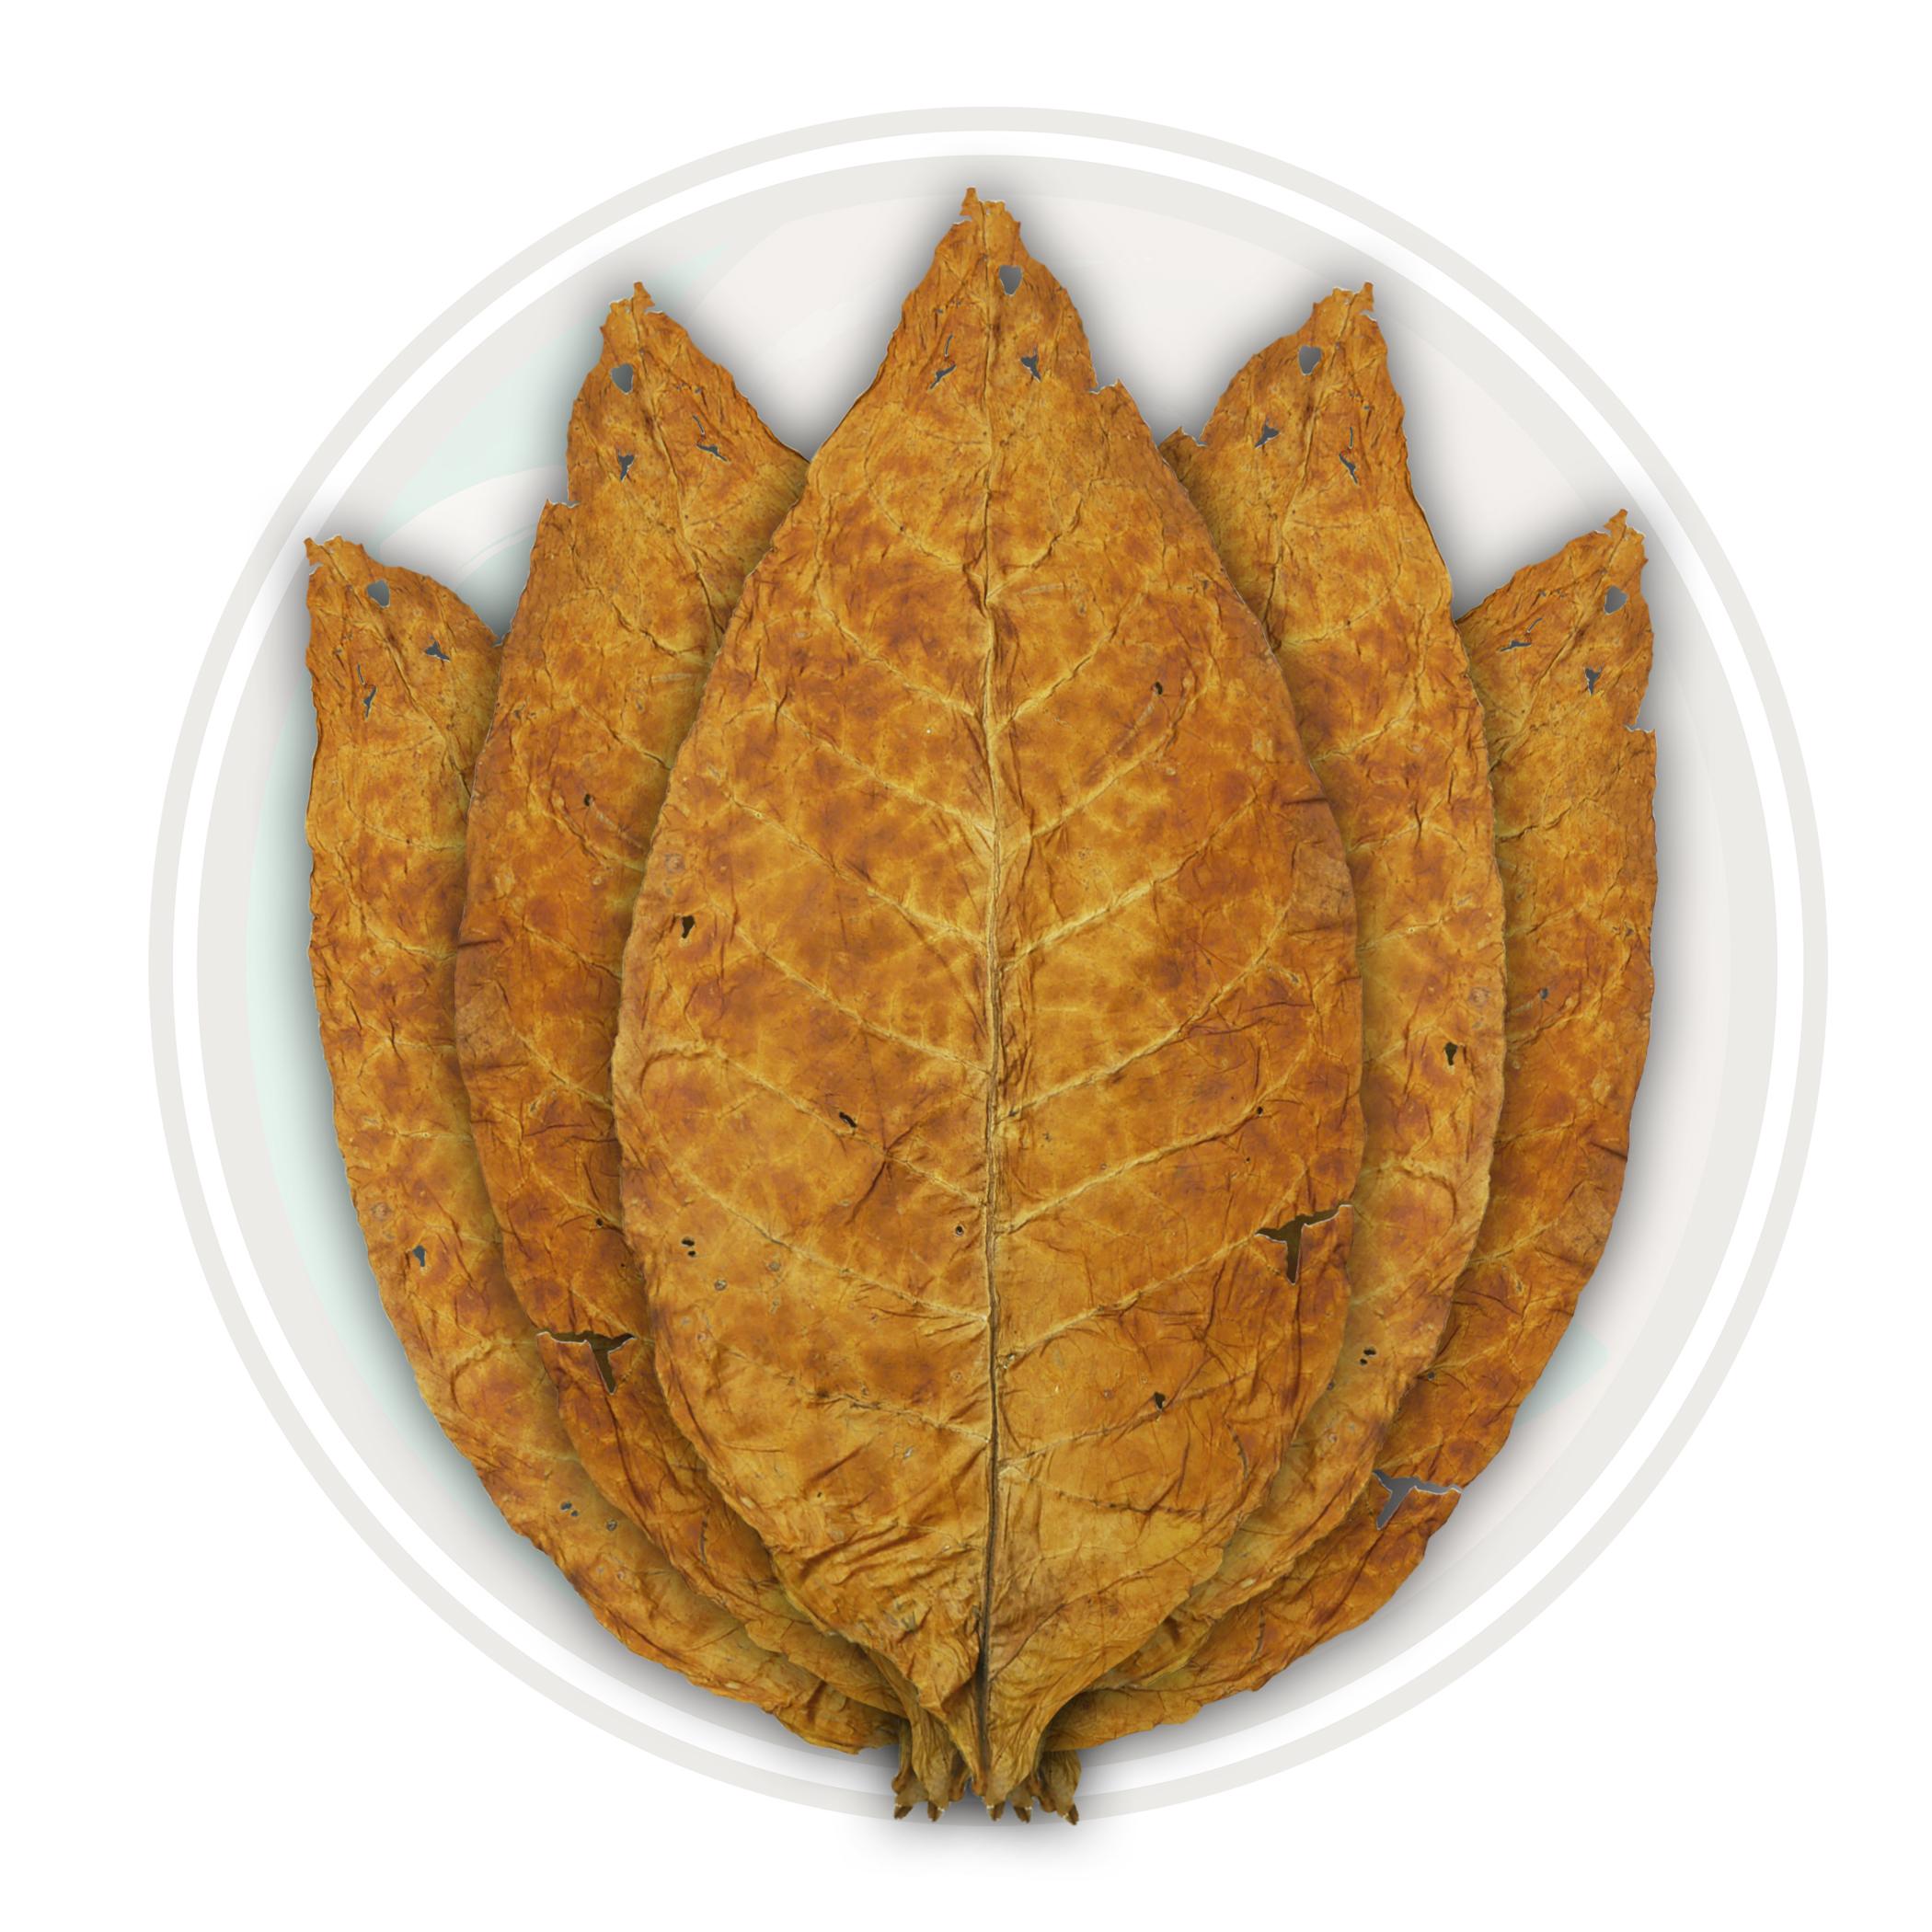 Brightleaf Virginia Flue Cured Tobacco Leaf - Smooth Whole Leaf Tobacco For  RYO, MYO, Pipe Tobacco, Hookah Tobacco, and more.